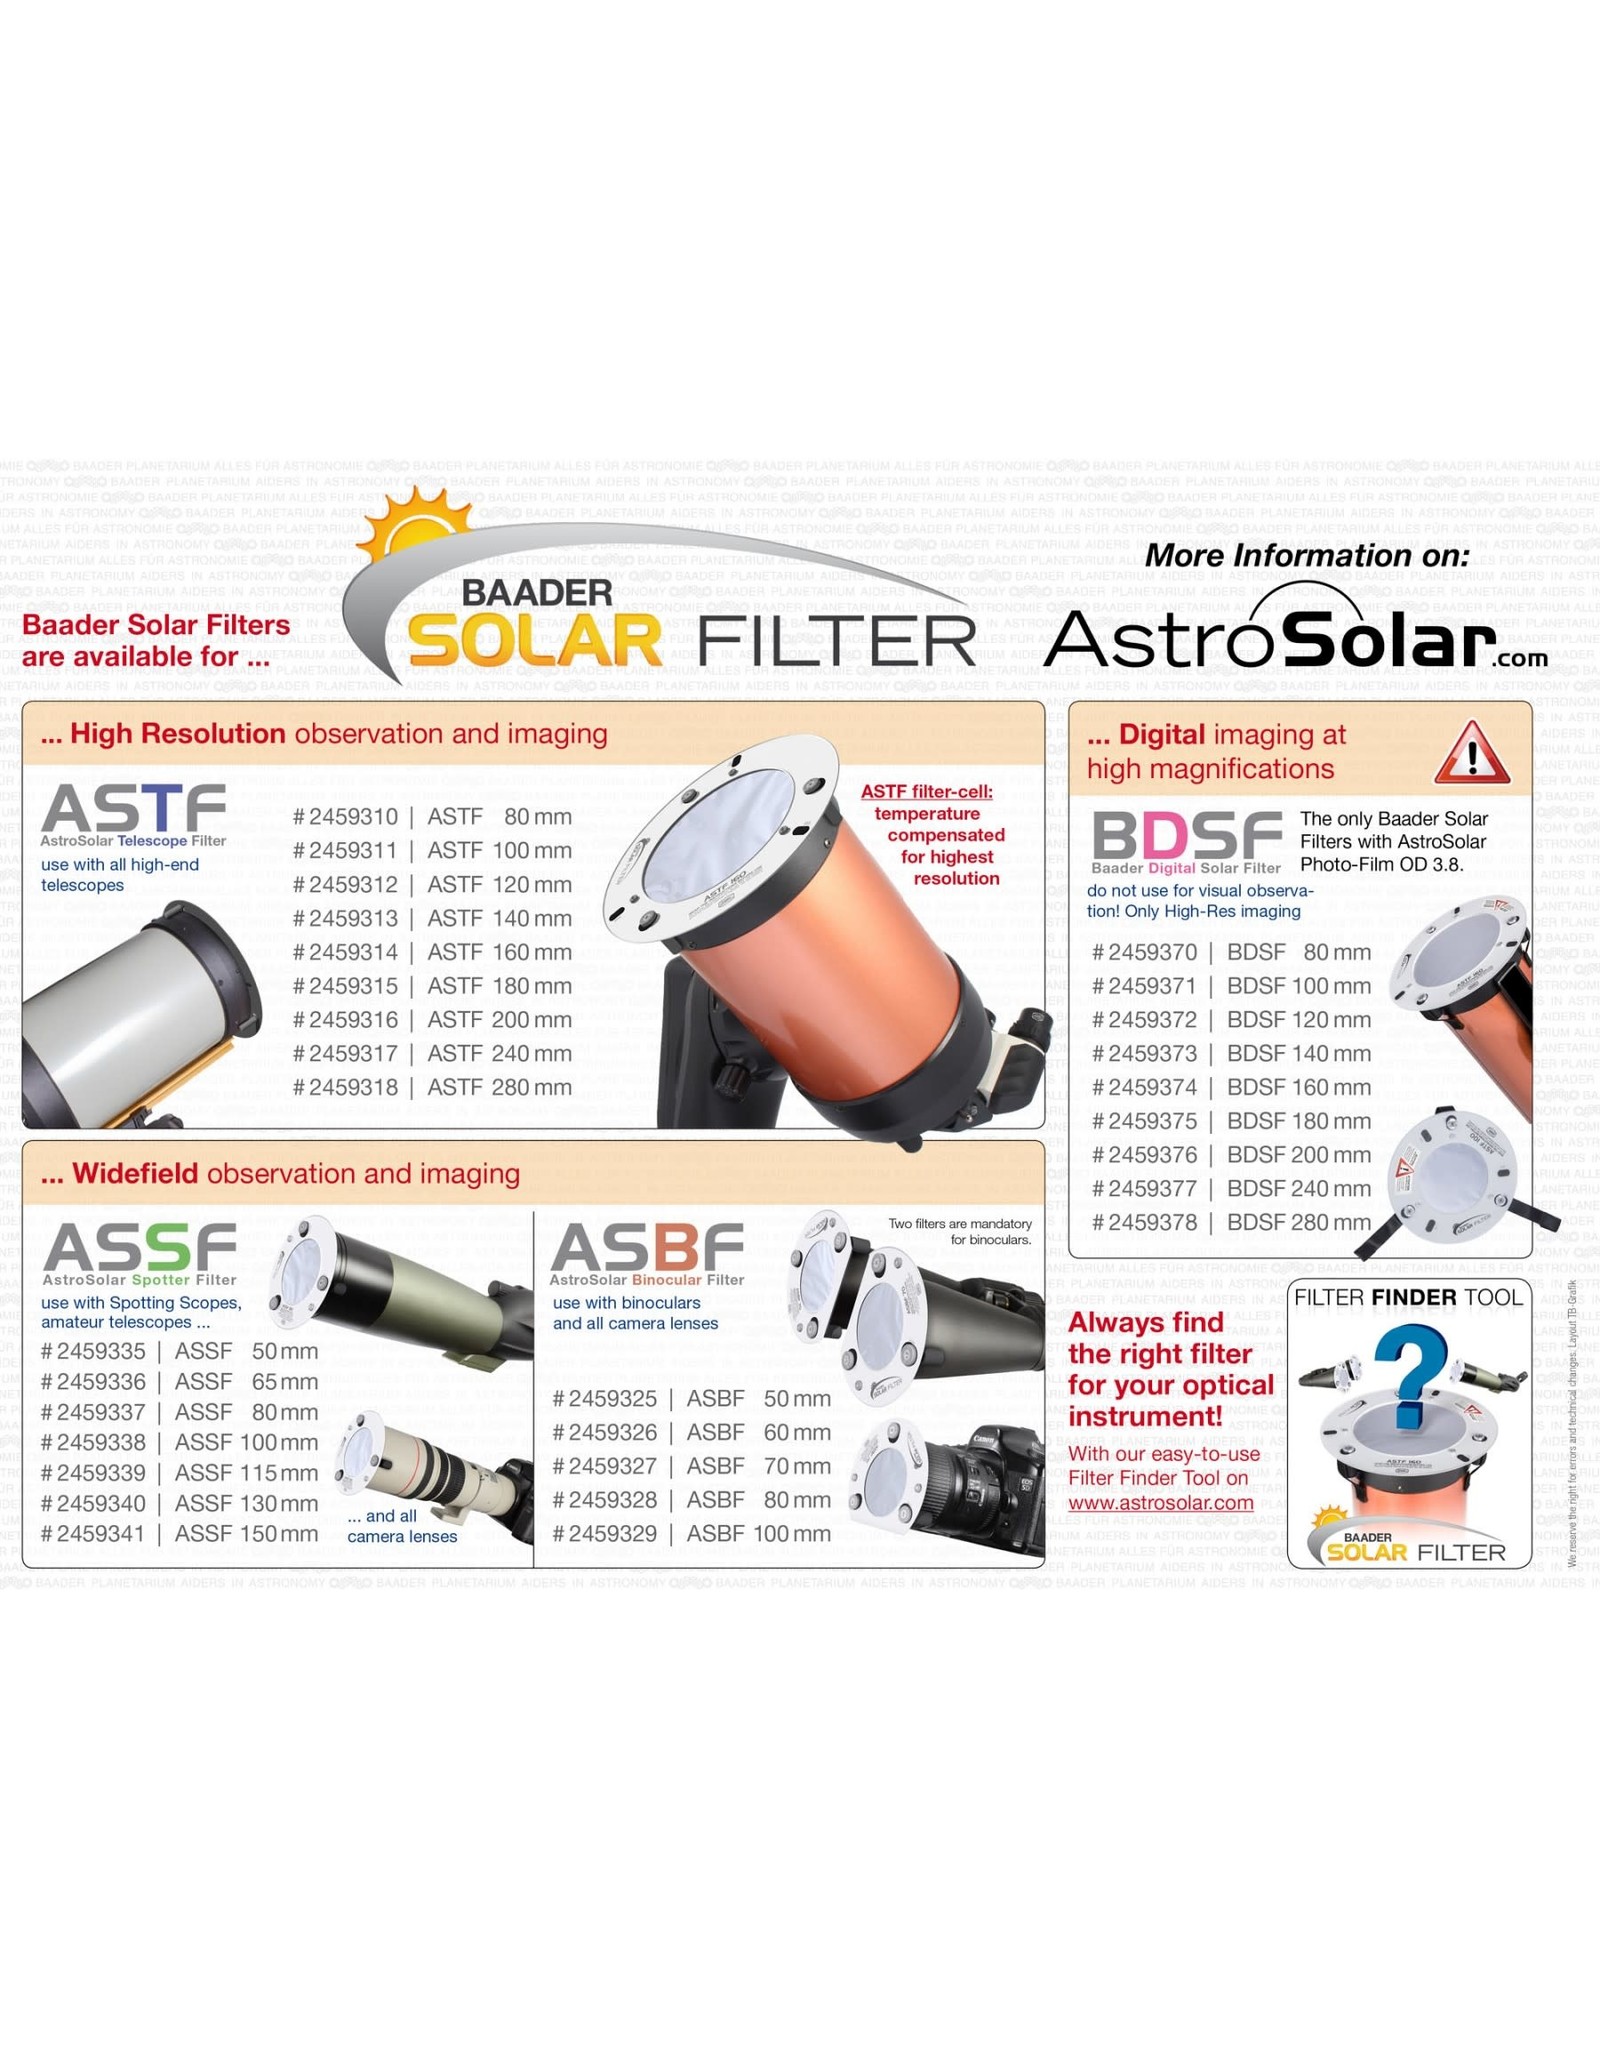 Baader Planetarium Baader ASTF: AstroSolar Telescope Filter OD 5.0 (Specify Size)